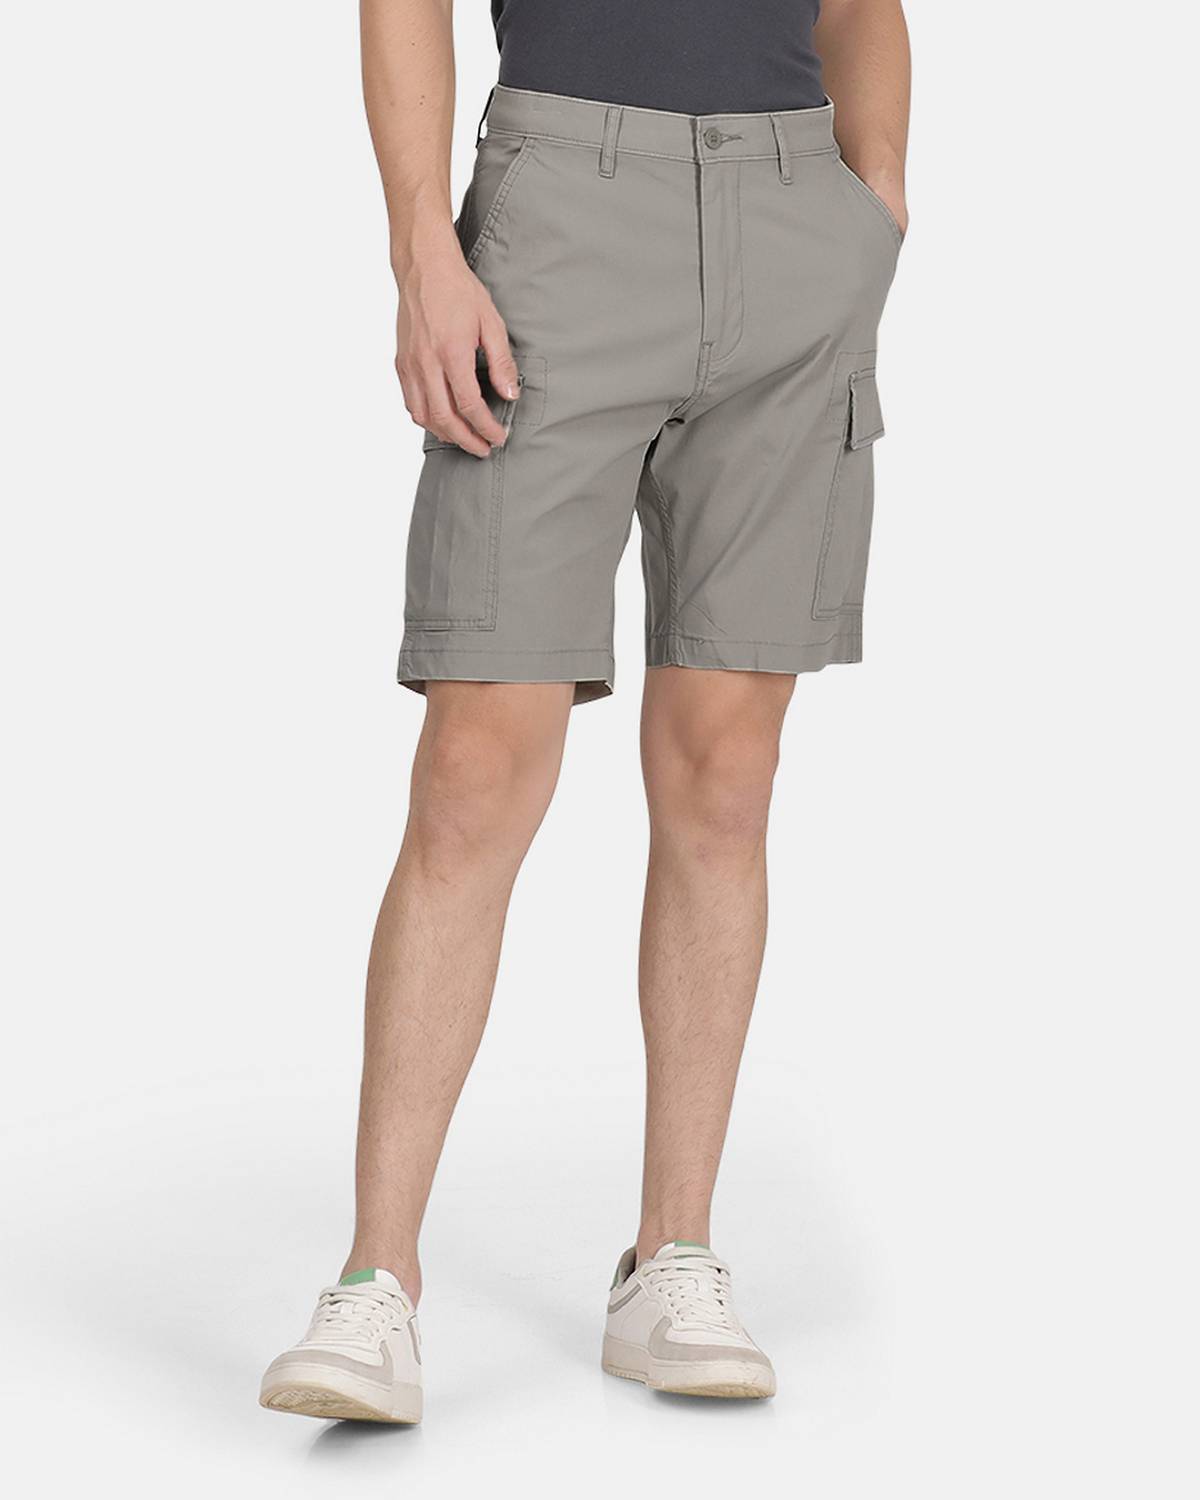 Model wearing tan cargo shorts